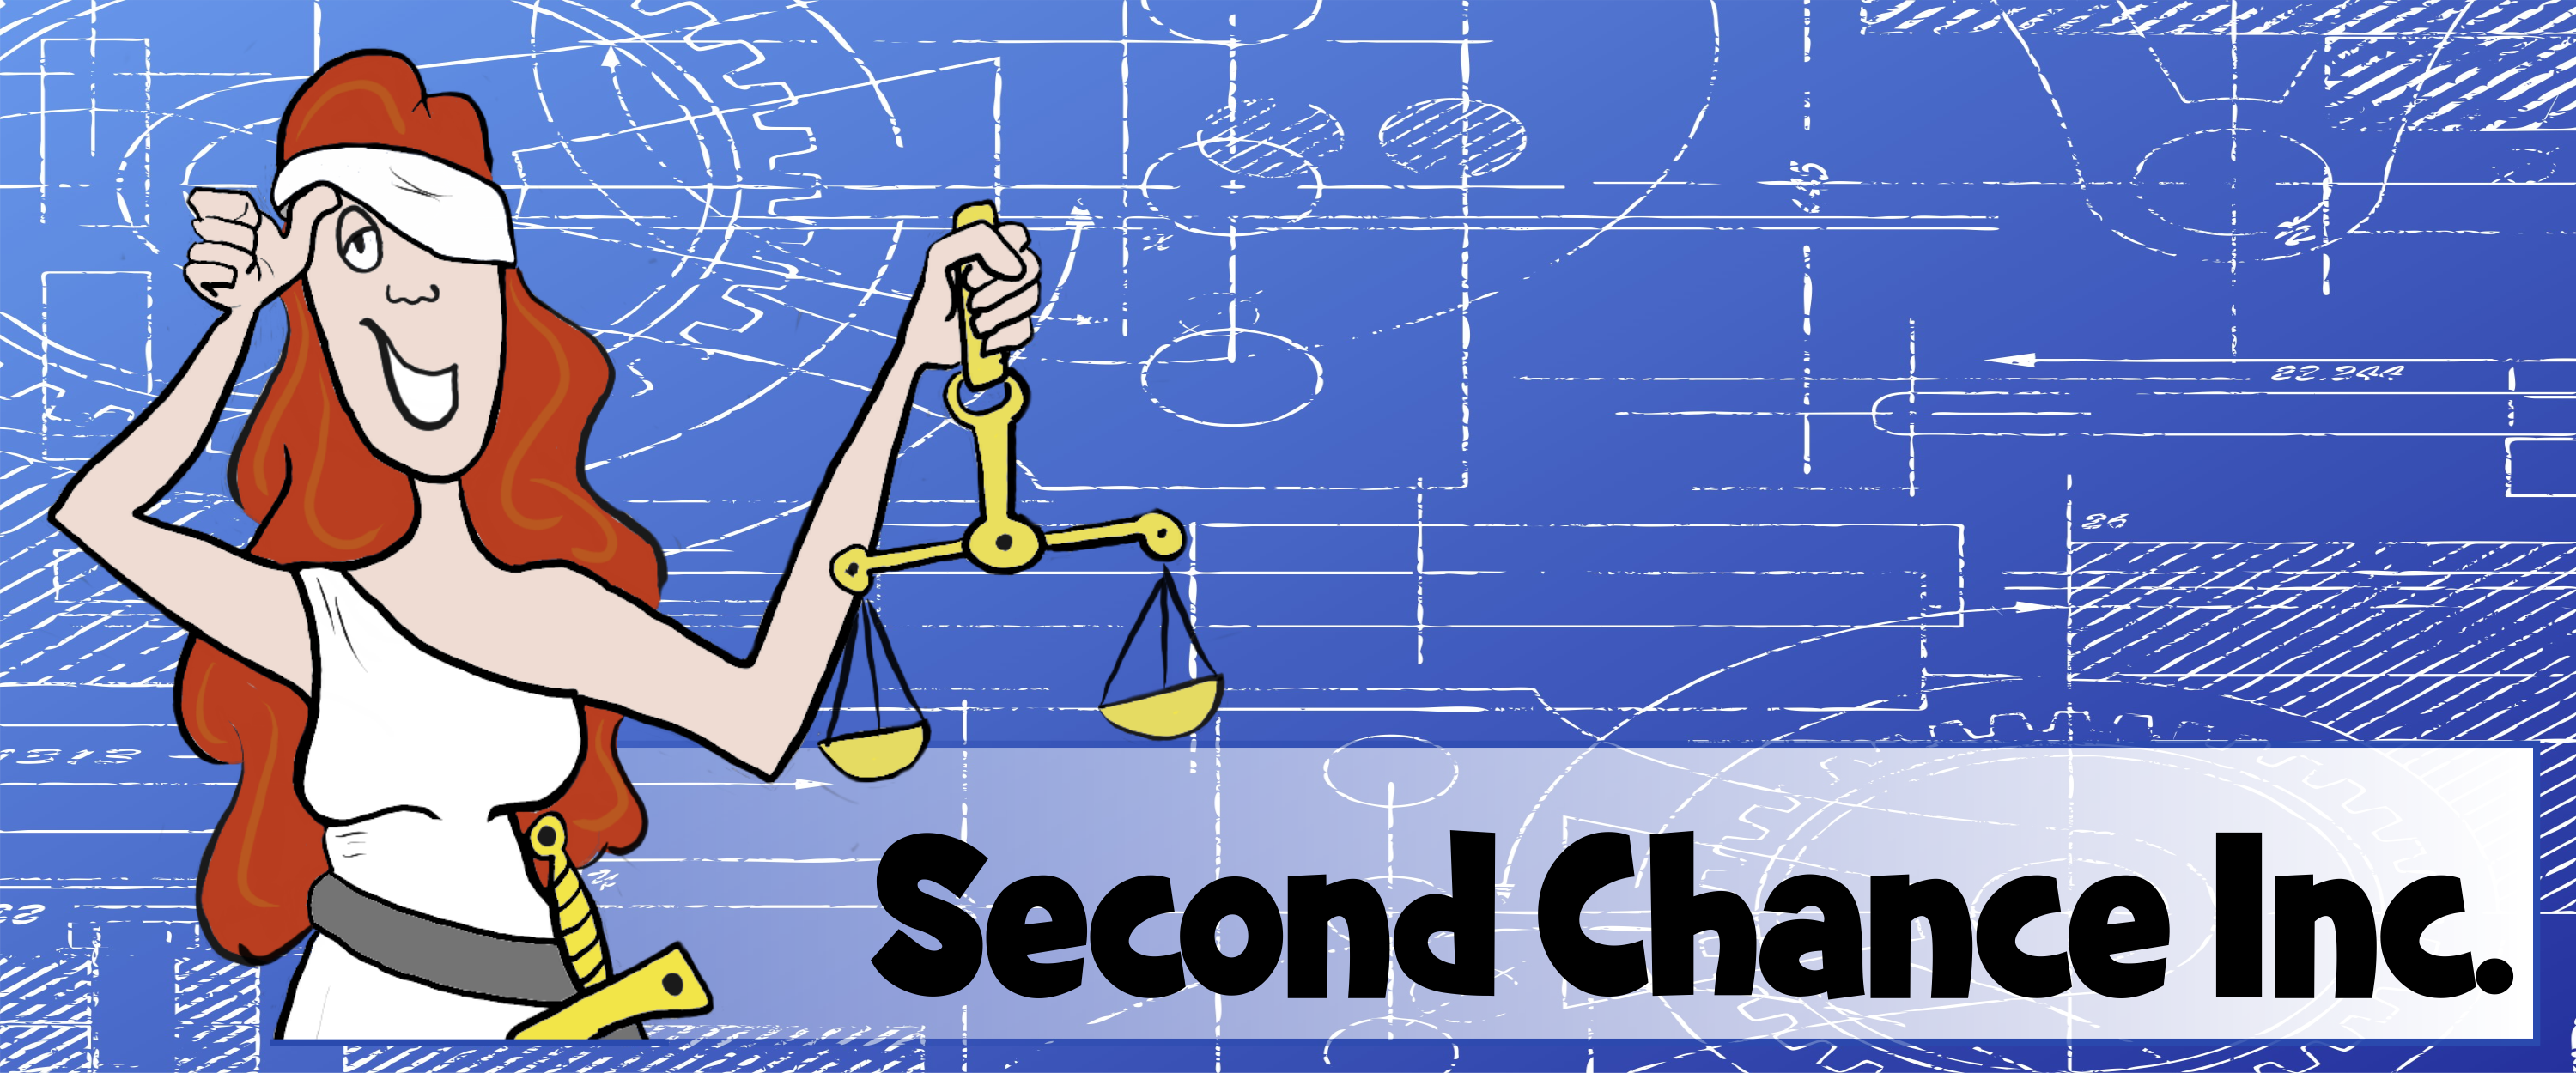 Second Chance Inc.